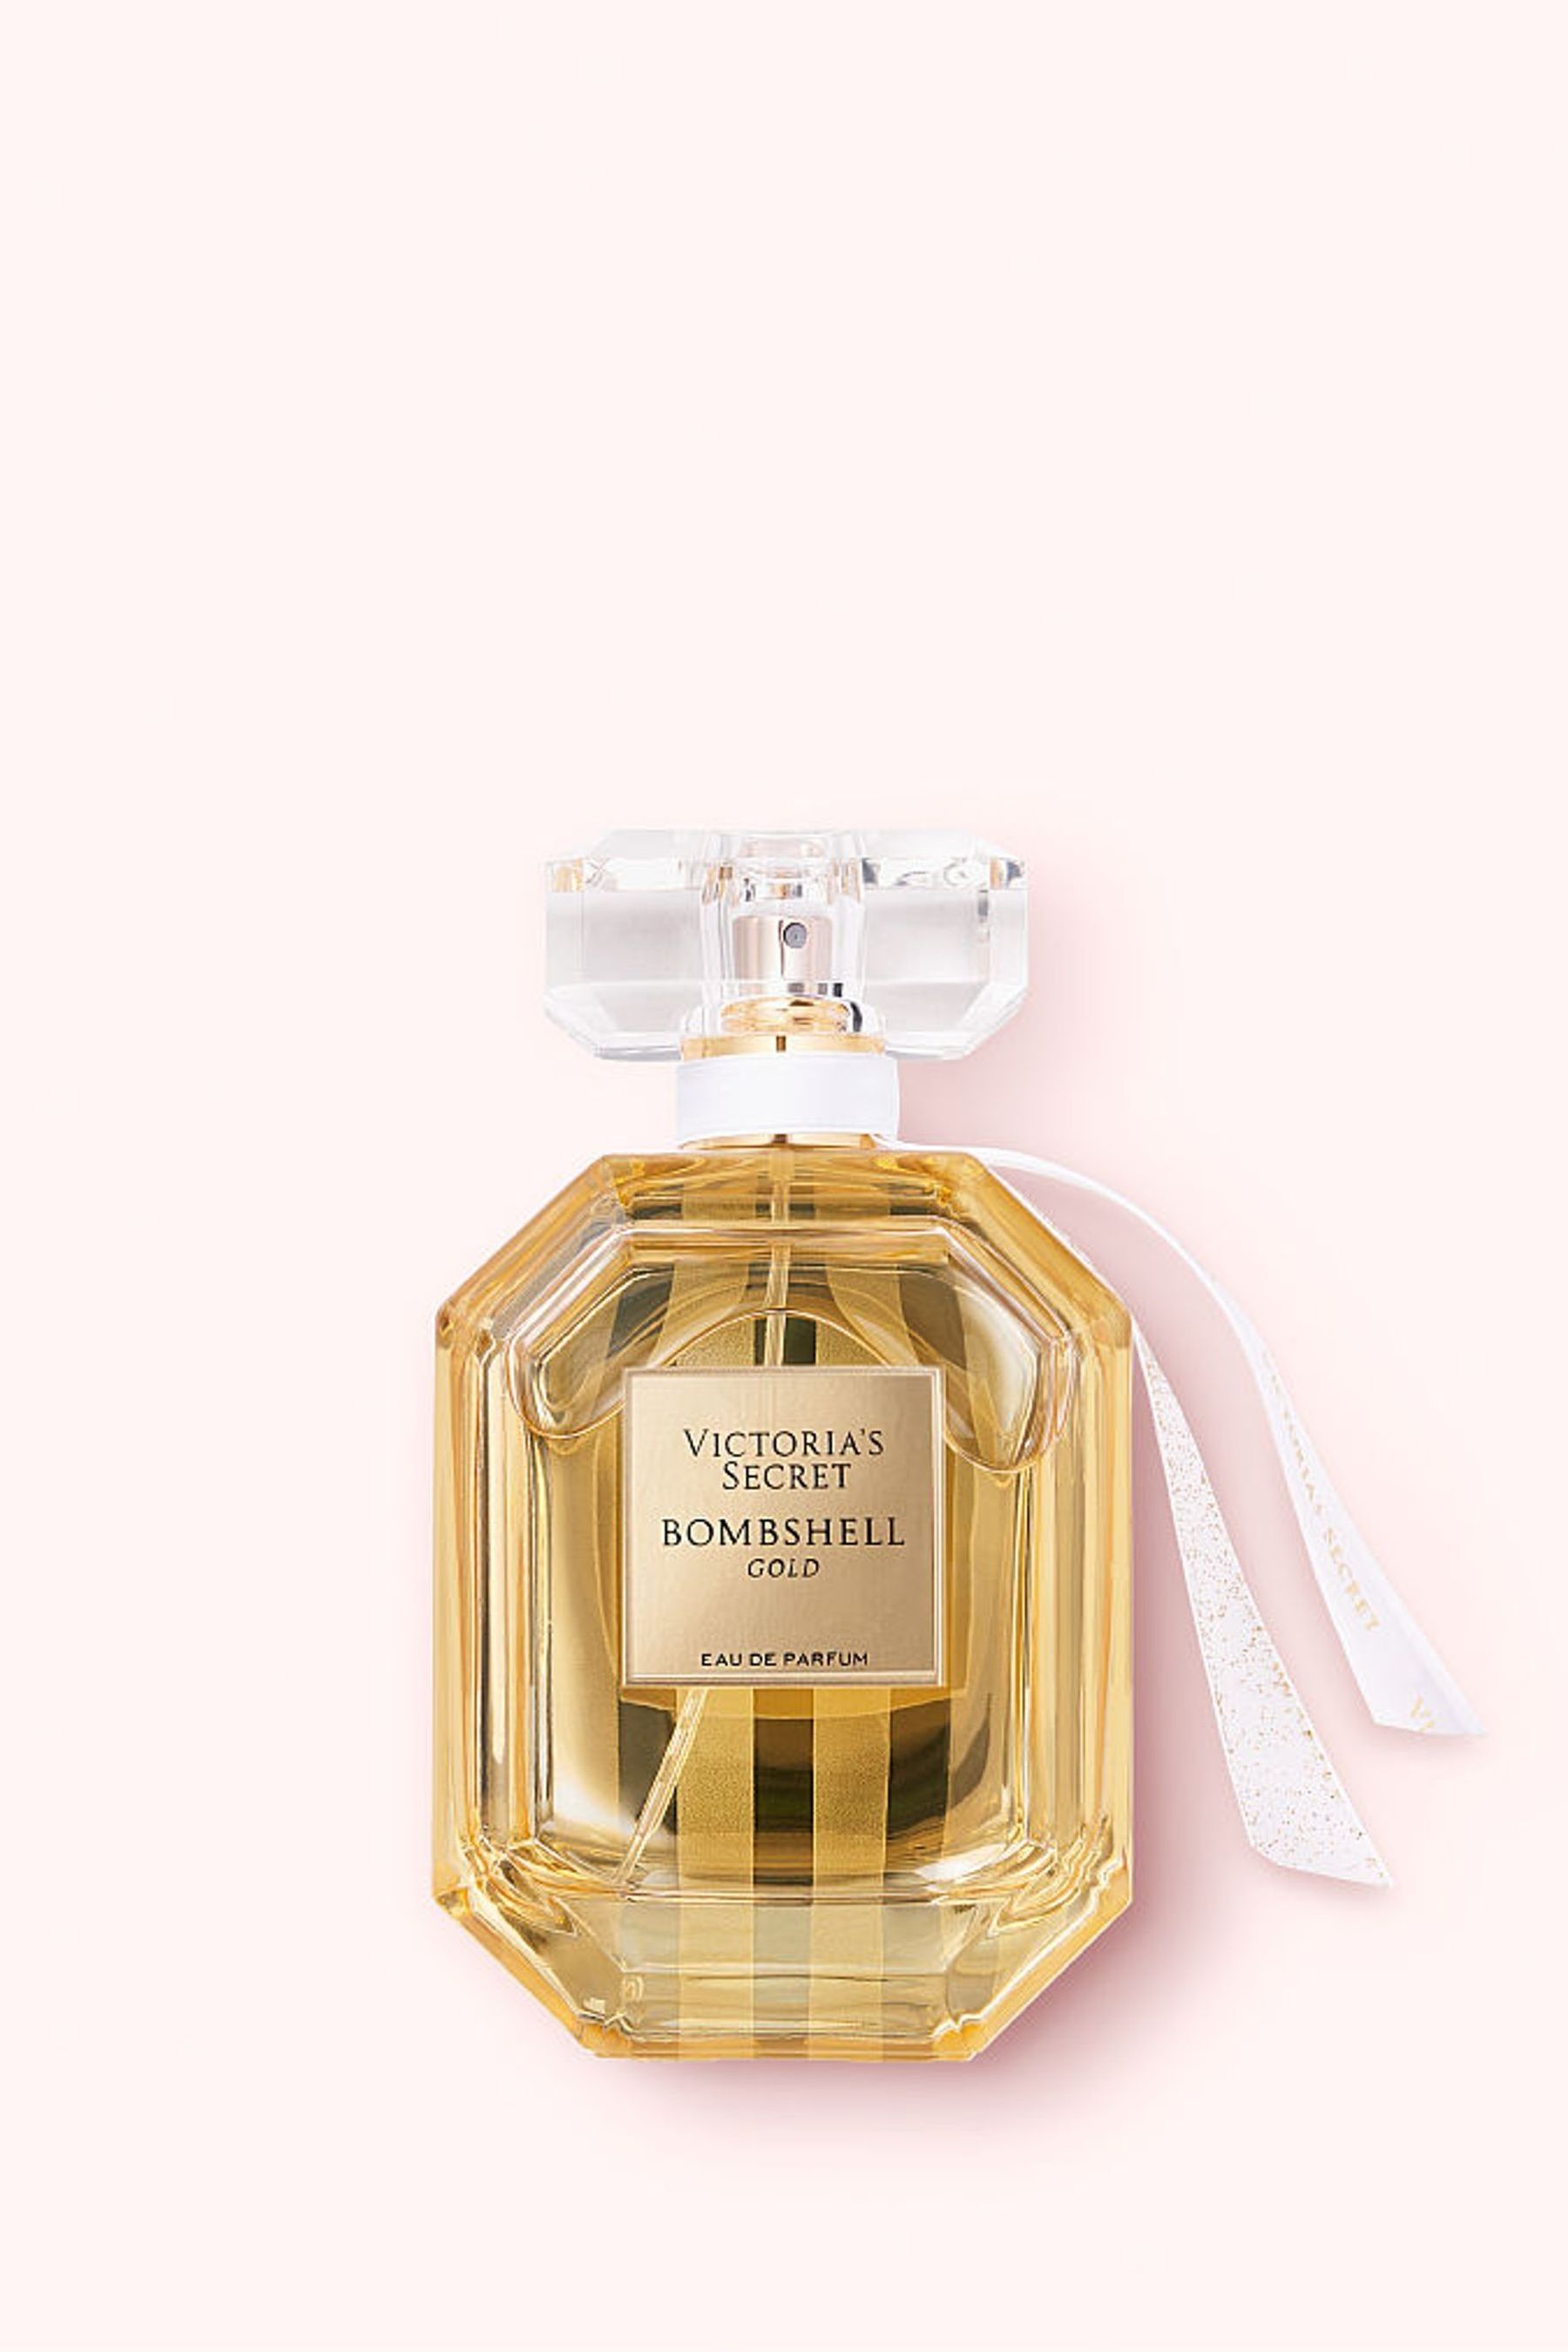 Buy Victoria's Secret Bombshell Gold Eau de Parfum from the Victoria's ...